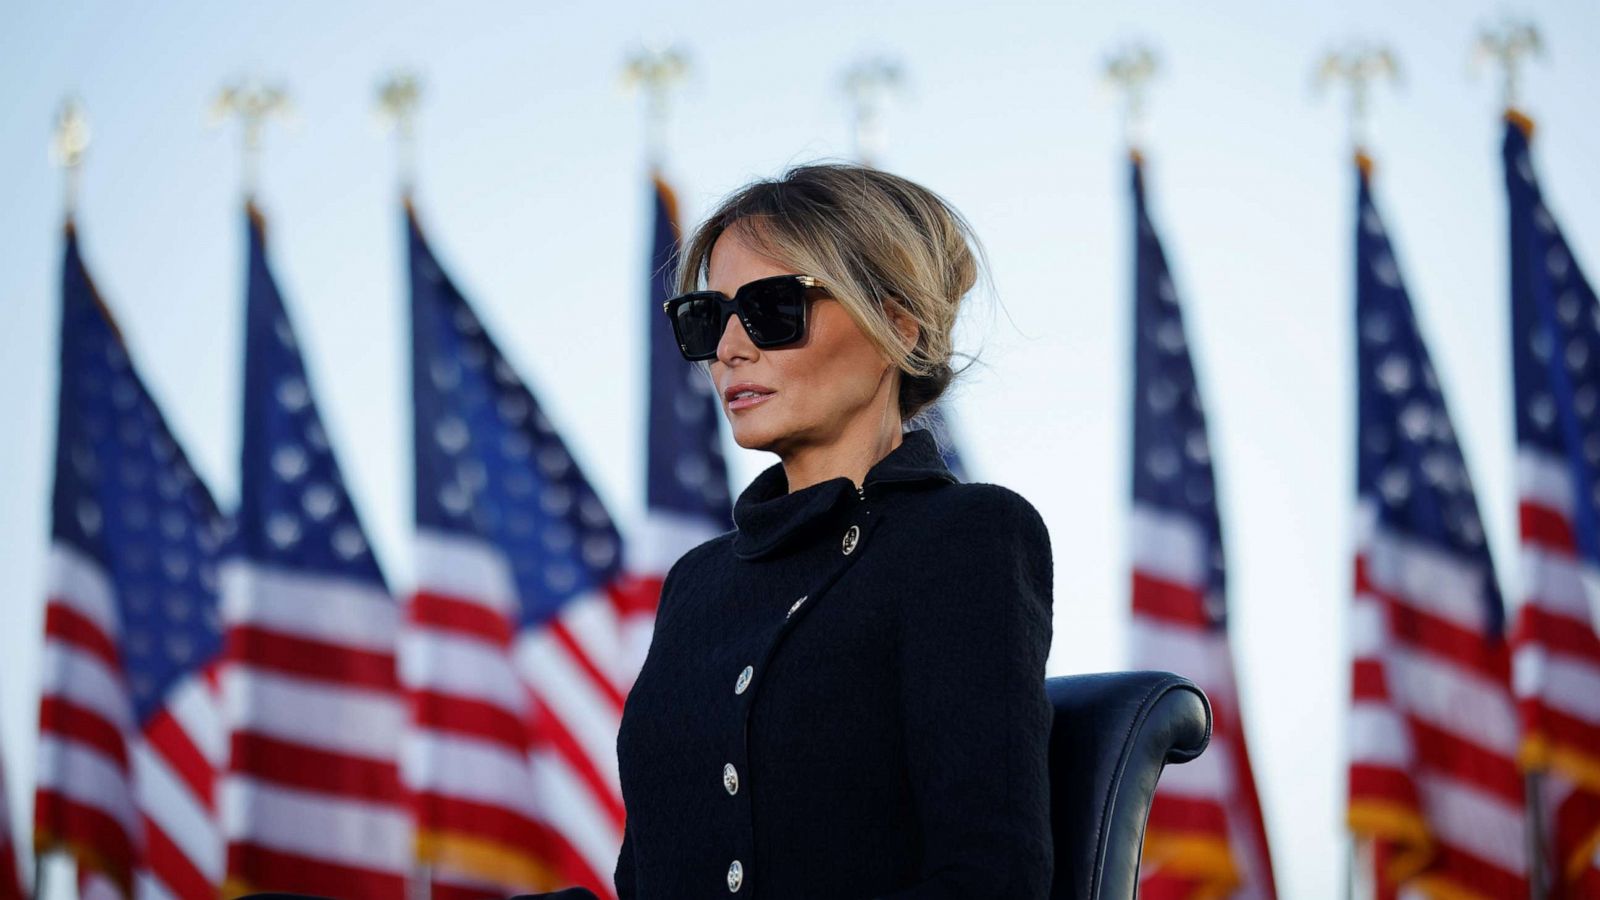 Melania Trump departs White House wearing luxury black dress and pumps -  Good Morning America